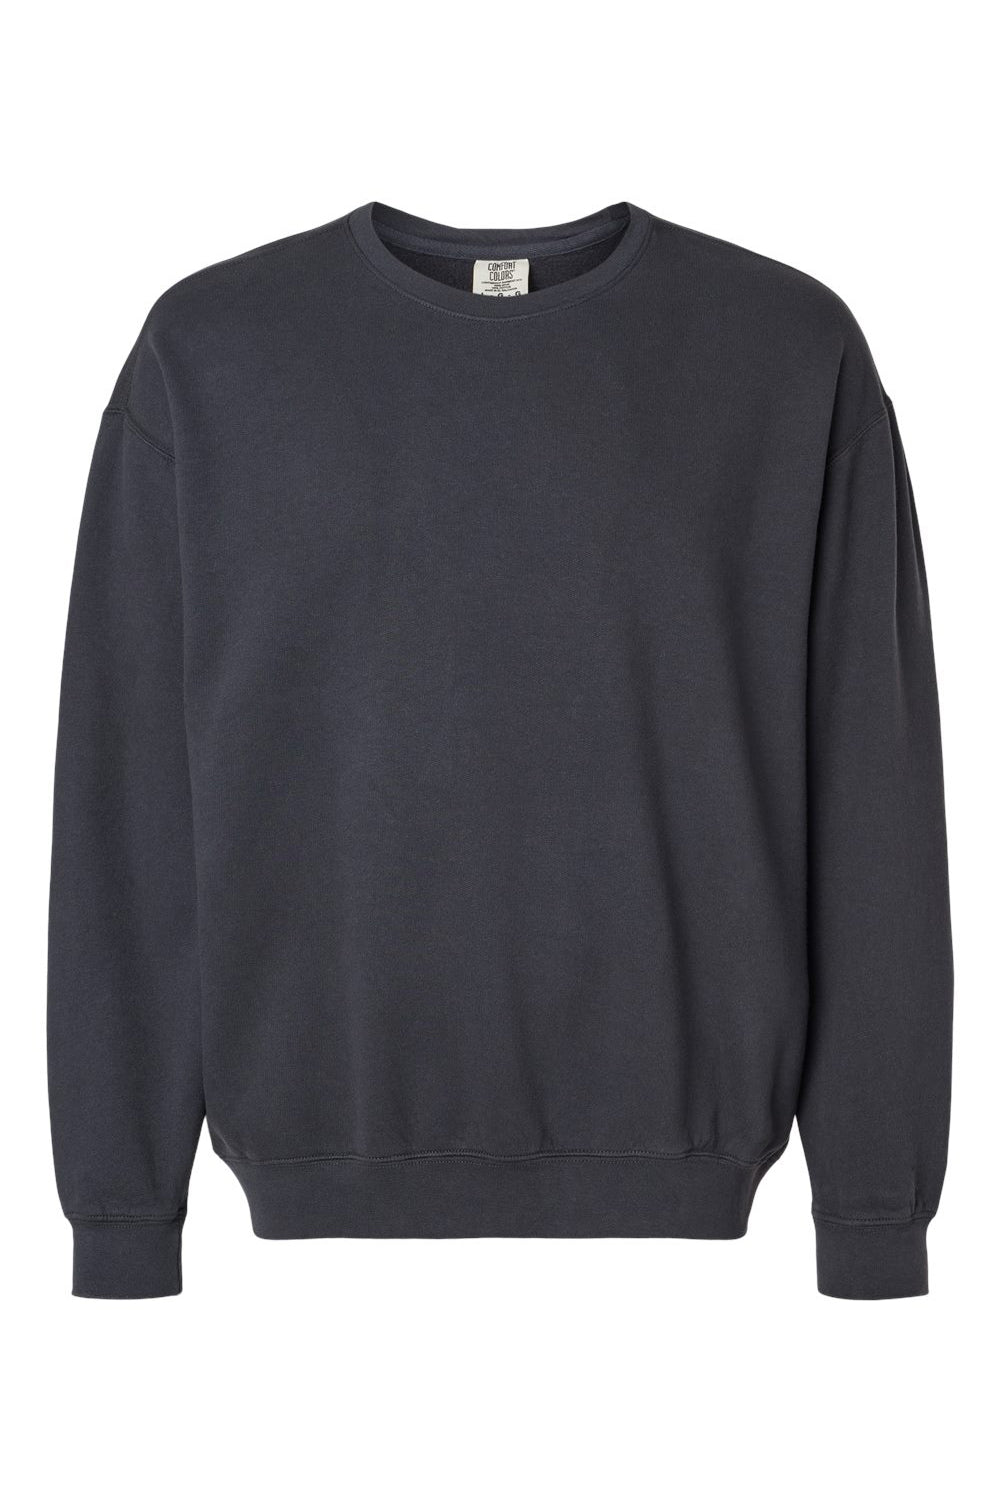 Comfort Colors 1466 Mens Garment Dyed Fleece Crewneck Sweatshirt Black Flat Front